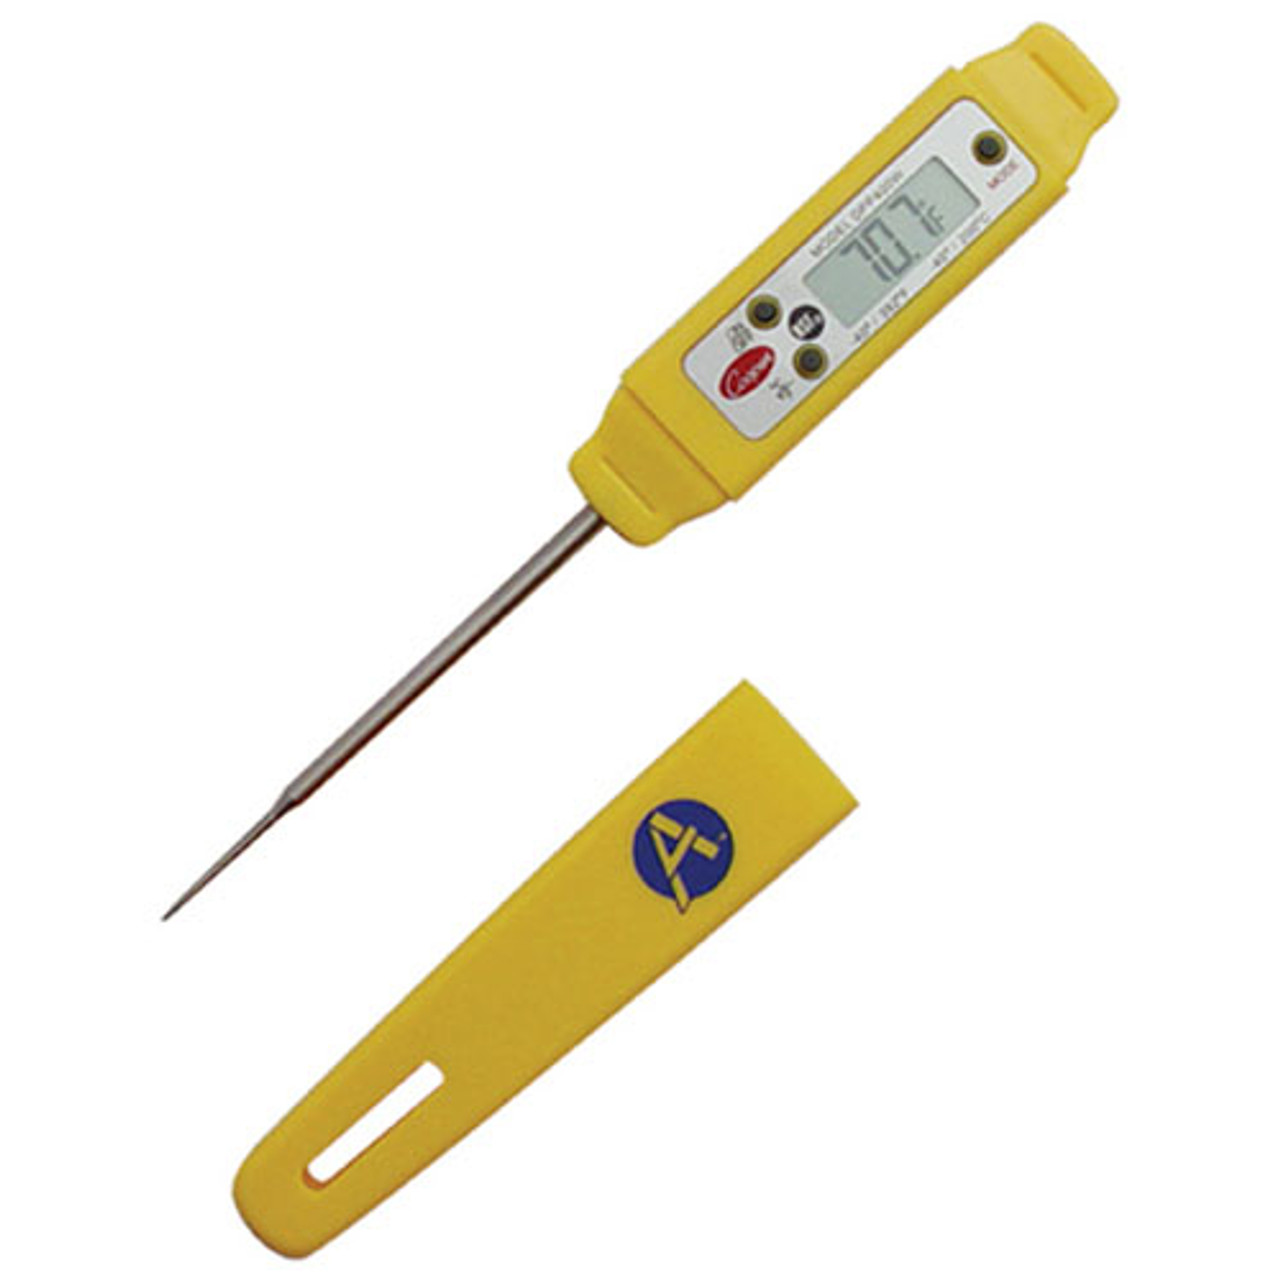 Atkins DPP400W0-8 - Digital Test Thermometer Cooper Atkins